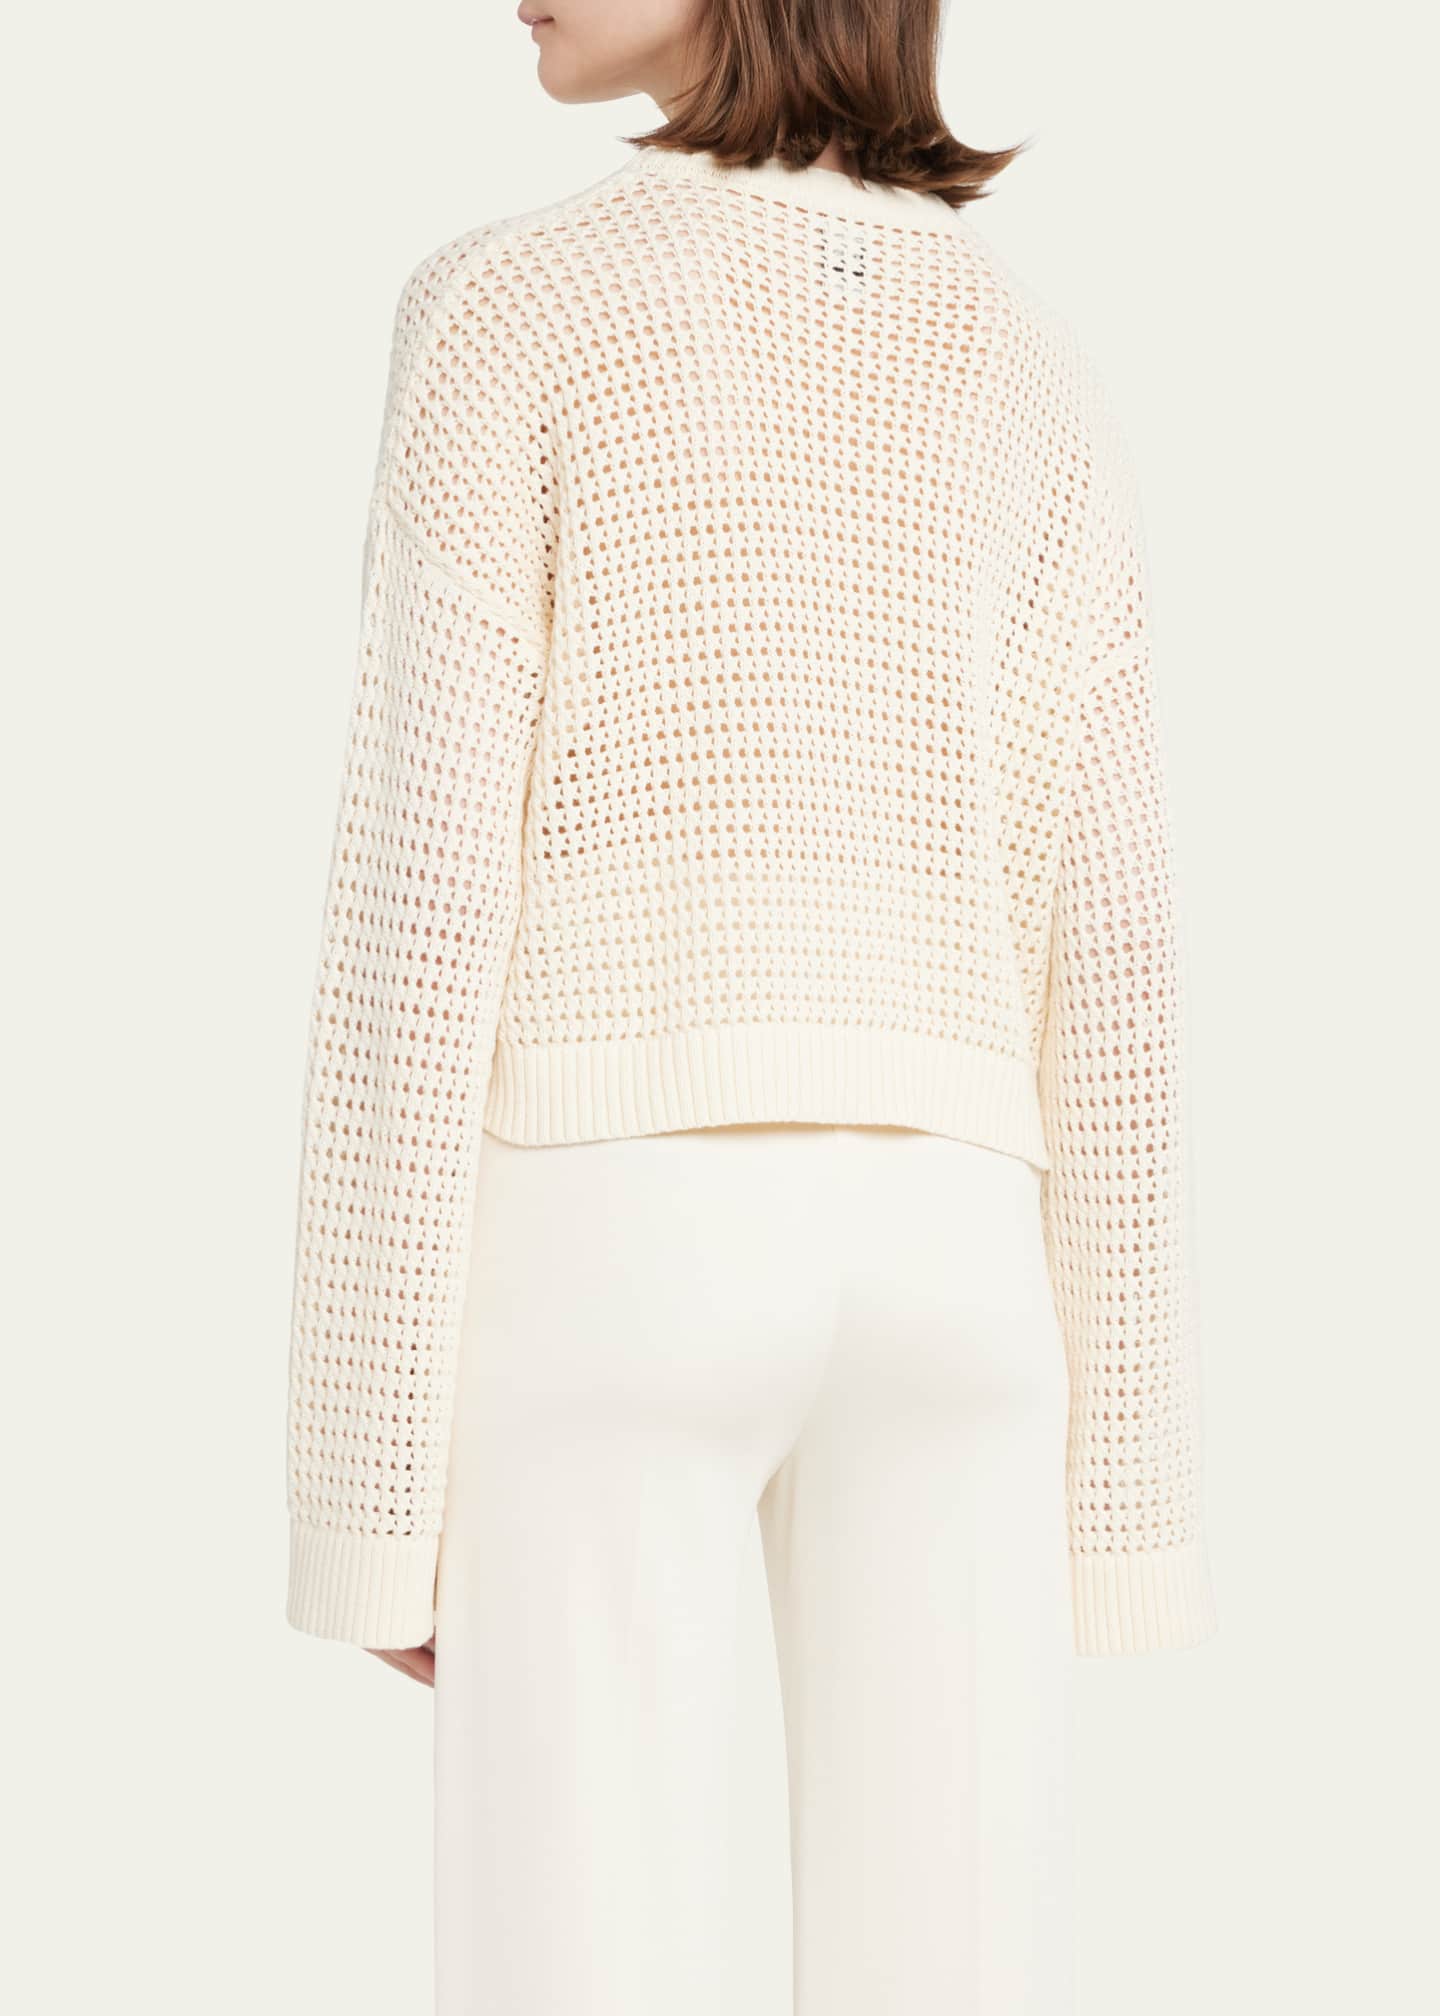 NSF Clothing Blayne Crochet Cropped Crewneck Sweater - Bergdorf Goodman